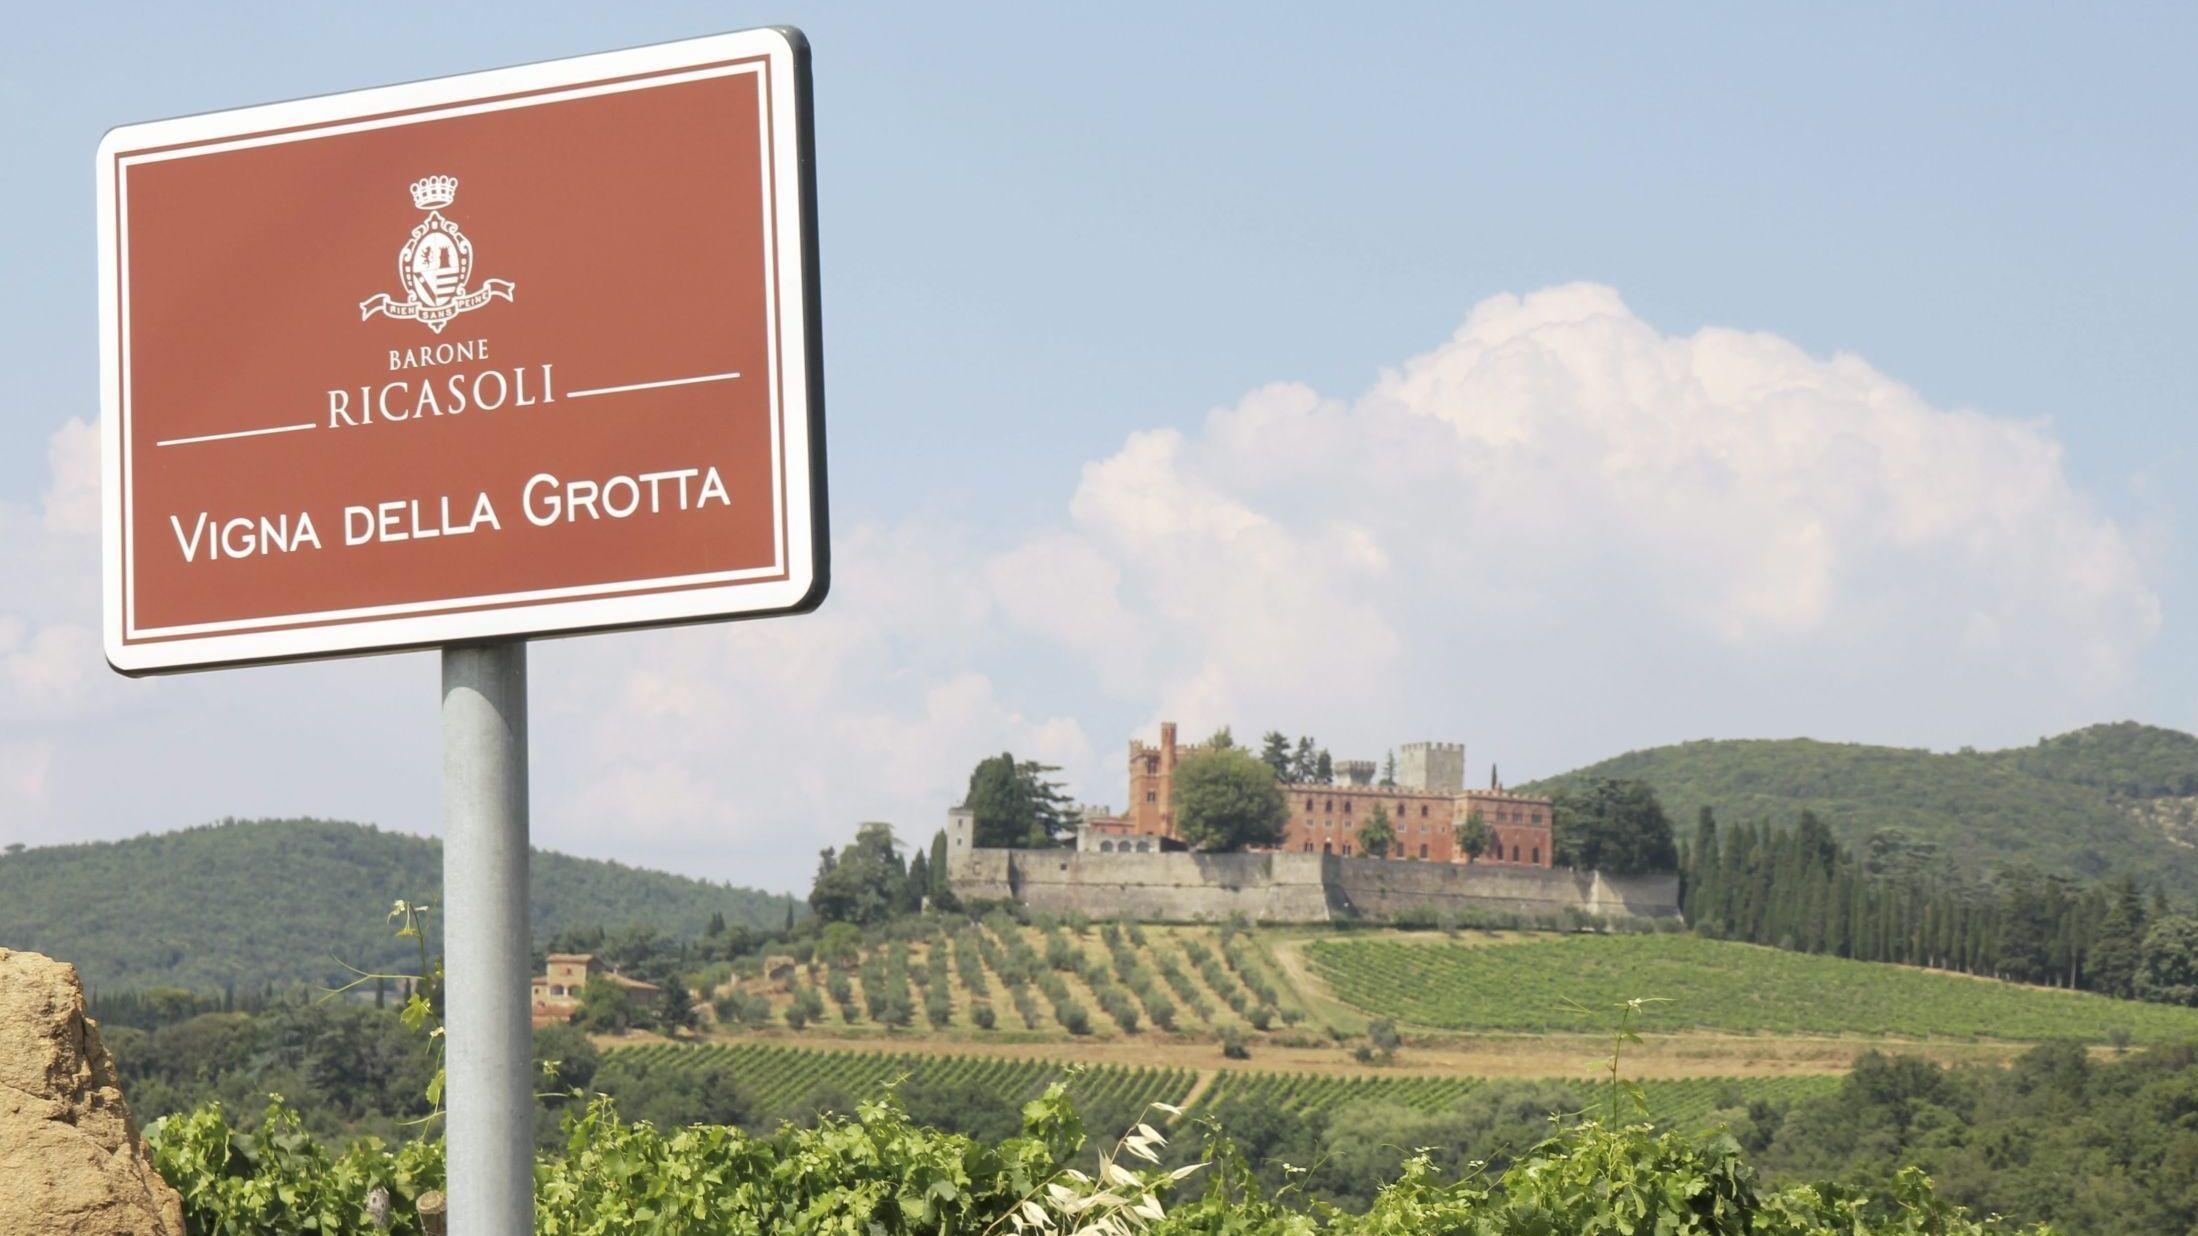 IDYLL: Gode viner og vakker natur i Toscana - her ser vi Castello di Brolio i Chianti. Foto: Geir Salvesen.